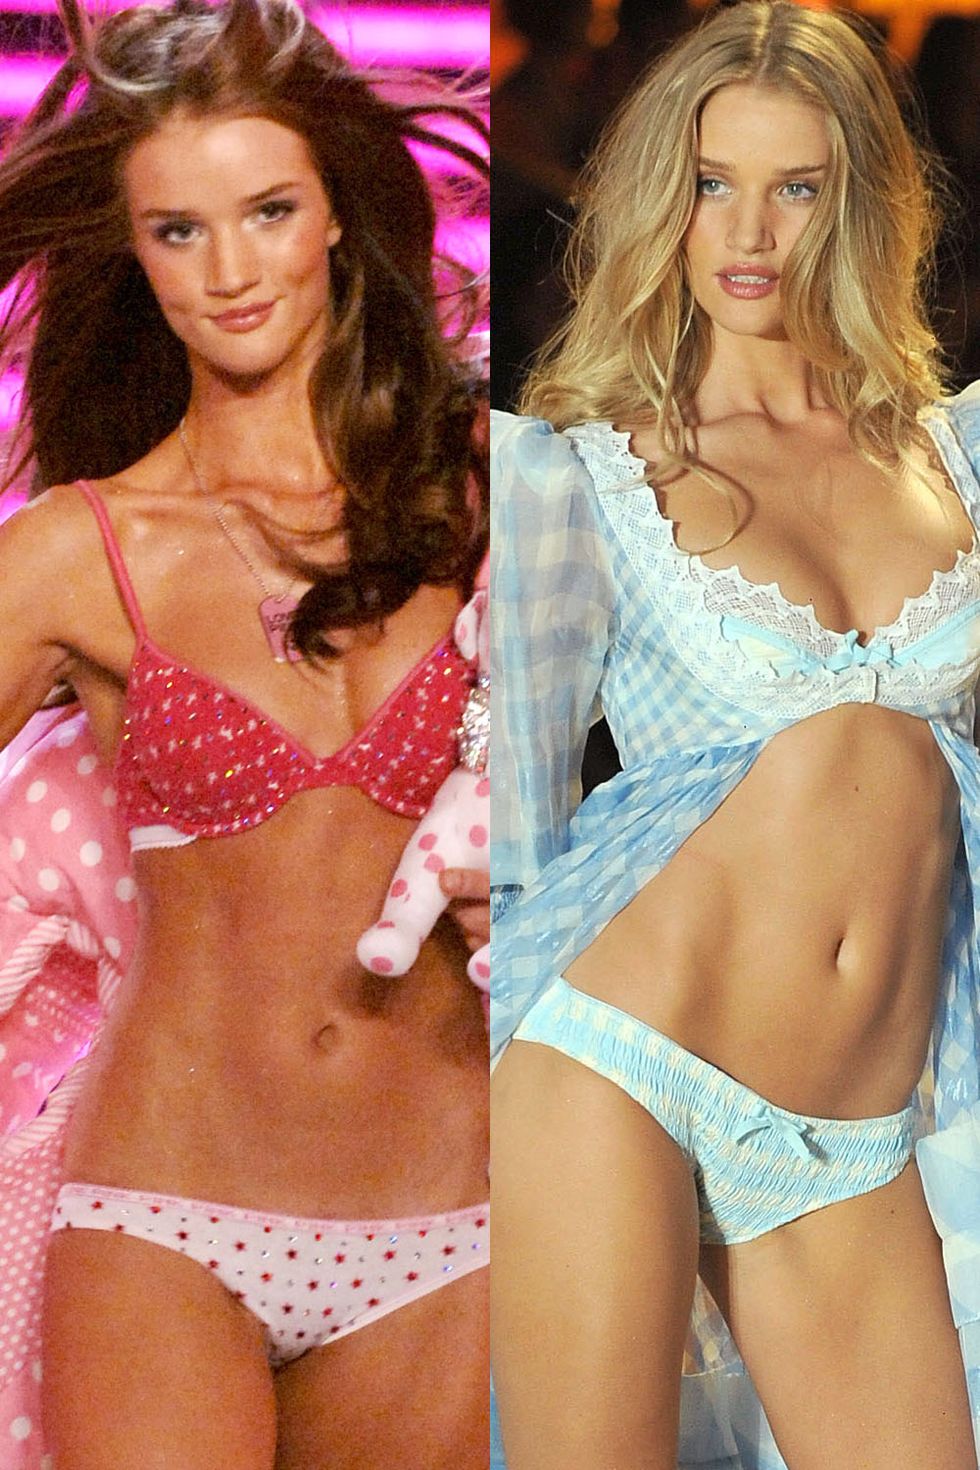 Victoria's Secret Models Then and Now